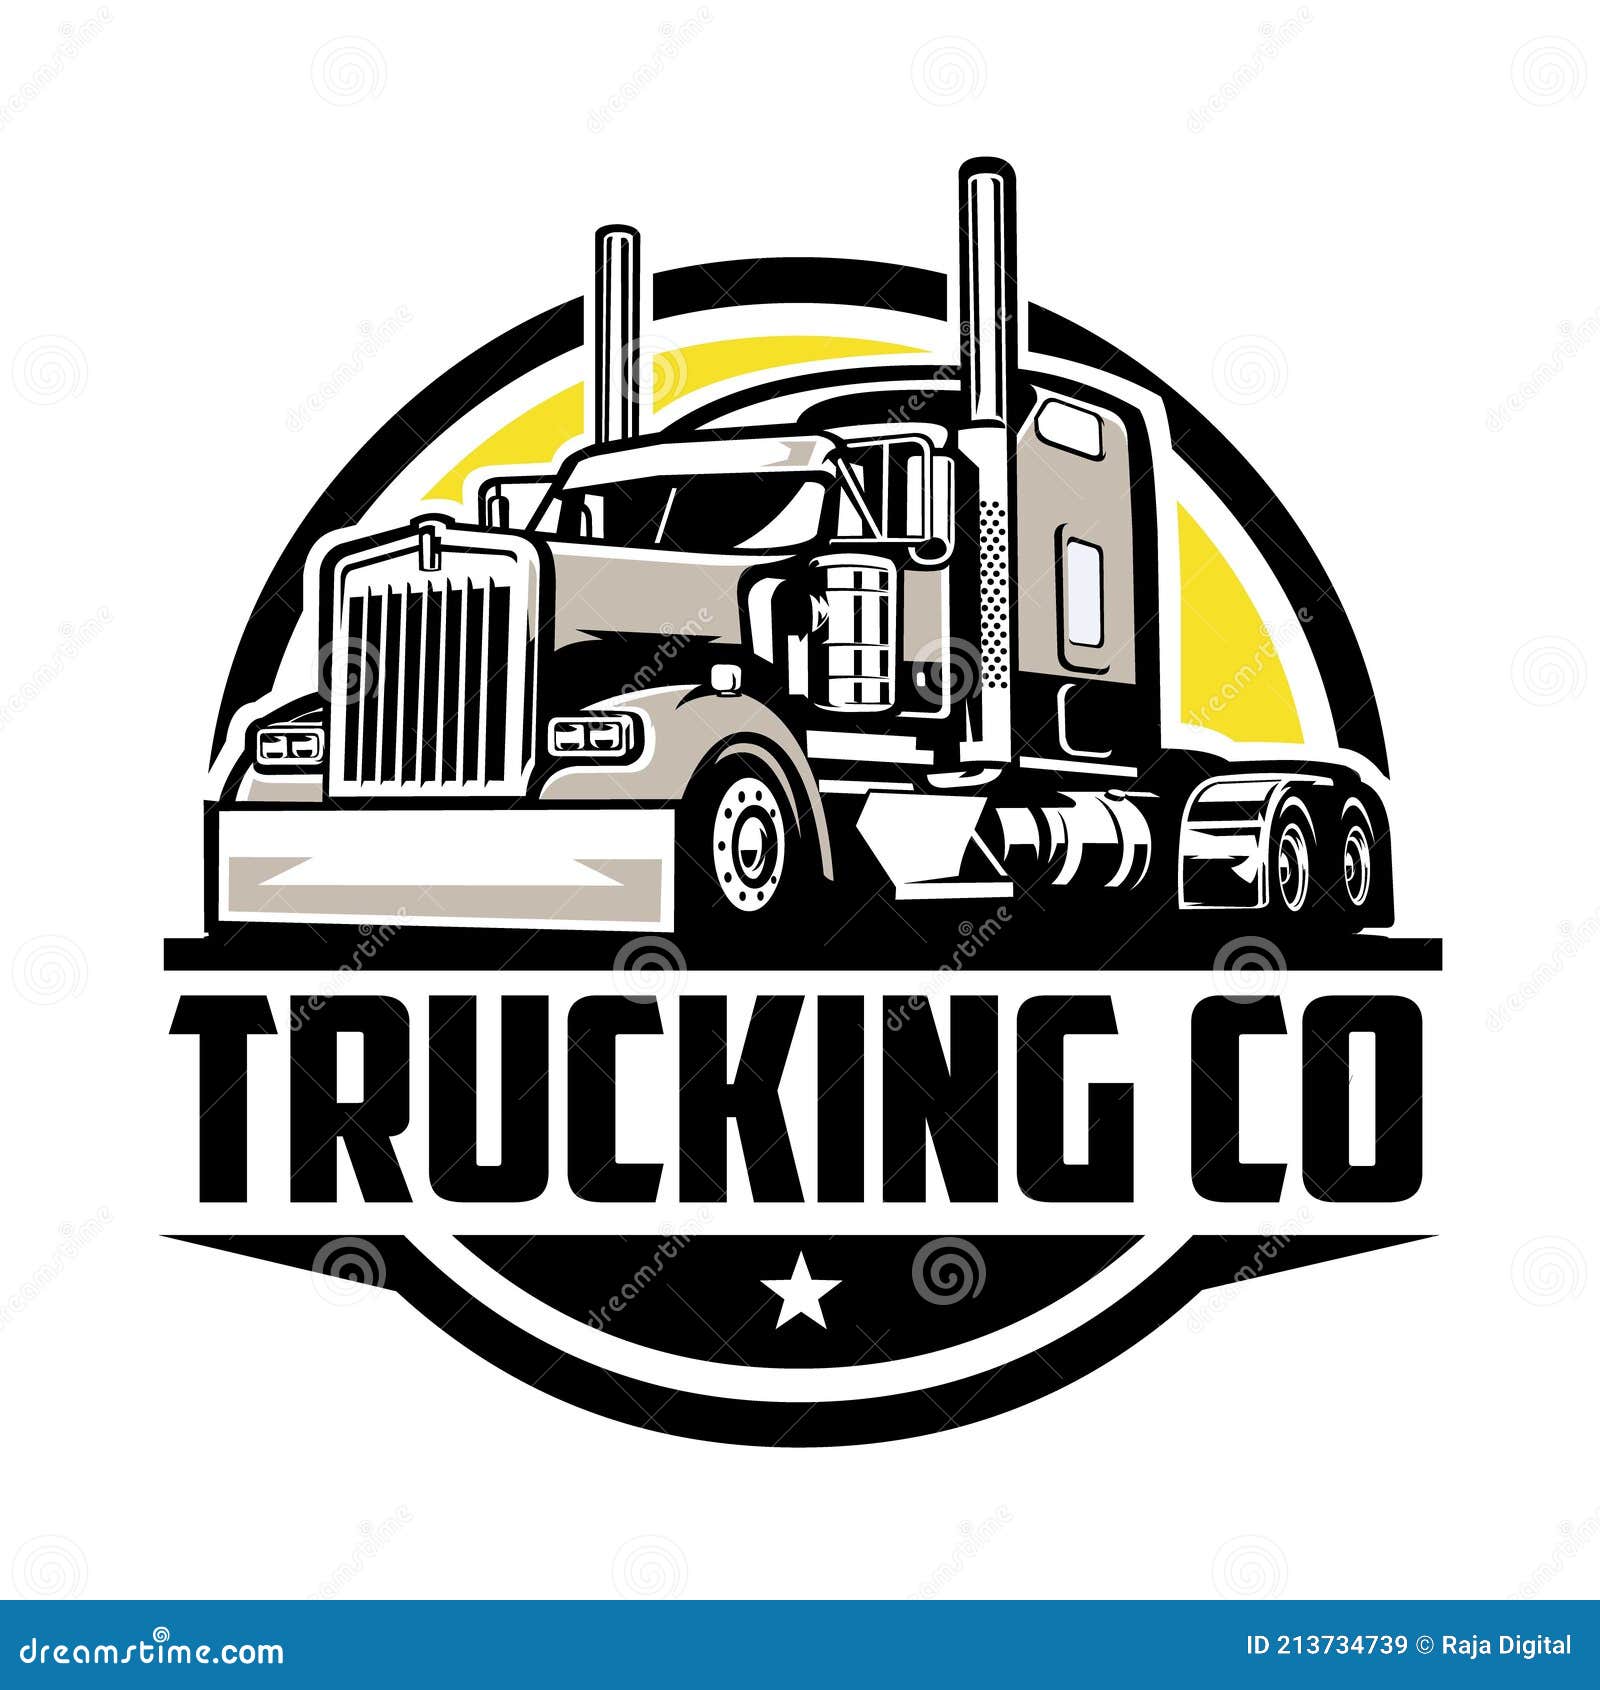 trucking company logo. premium circle badge emblem logo